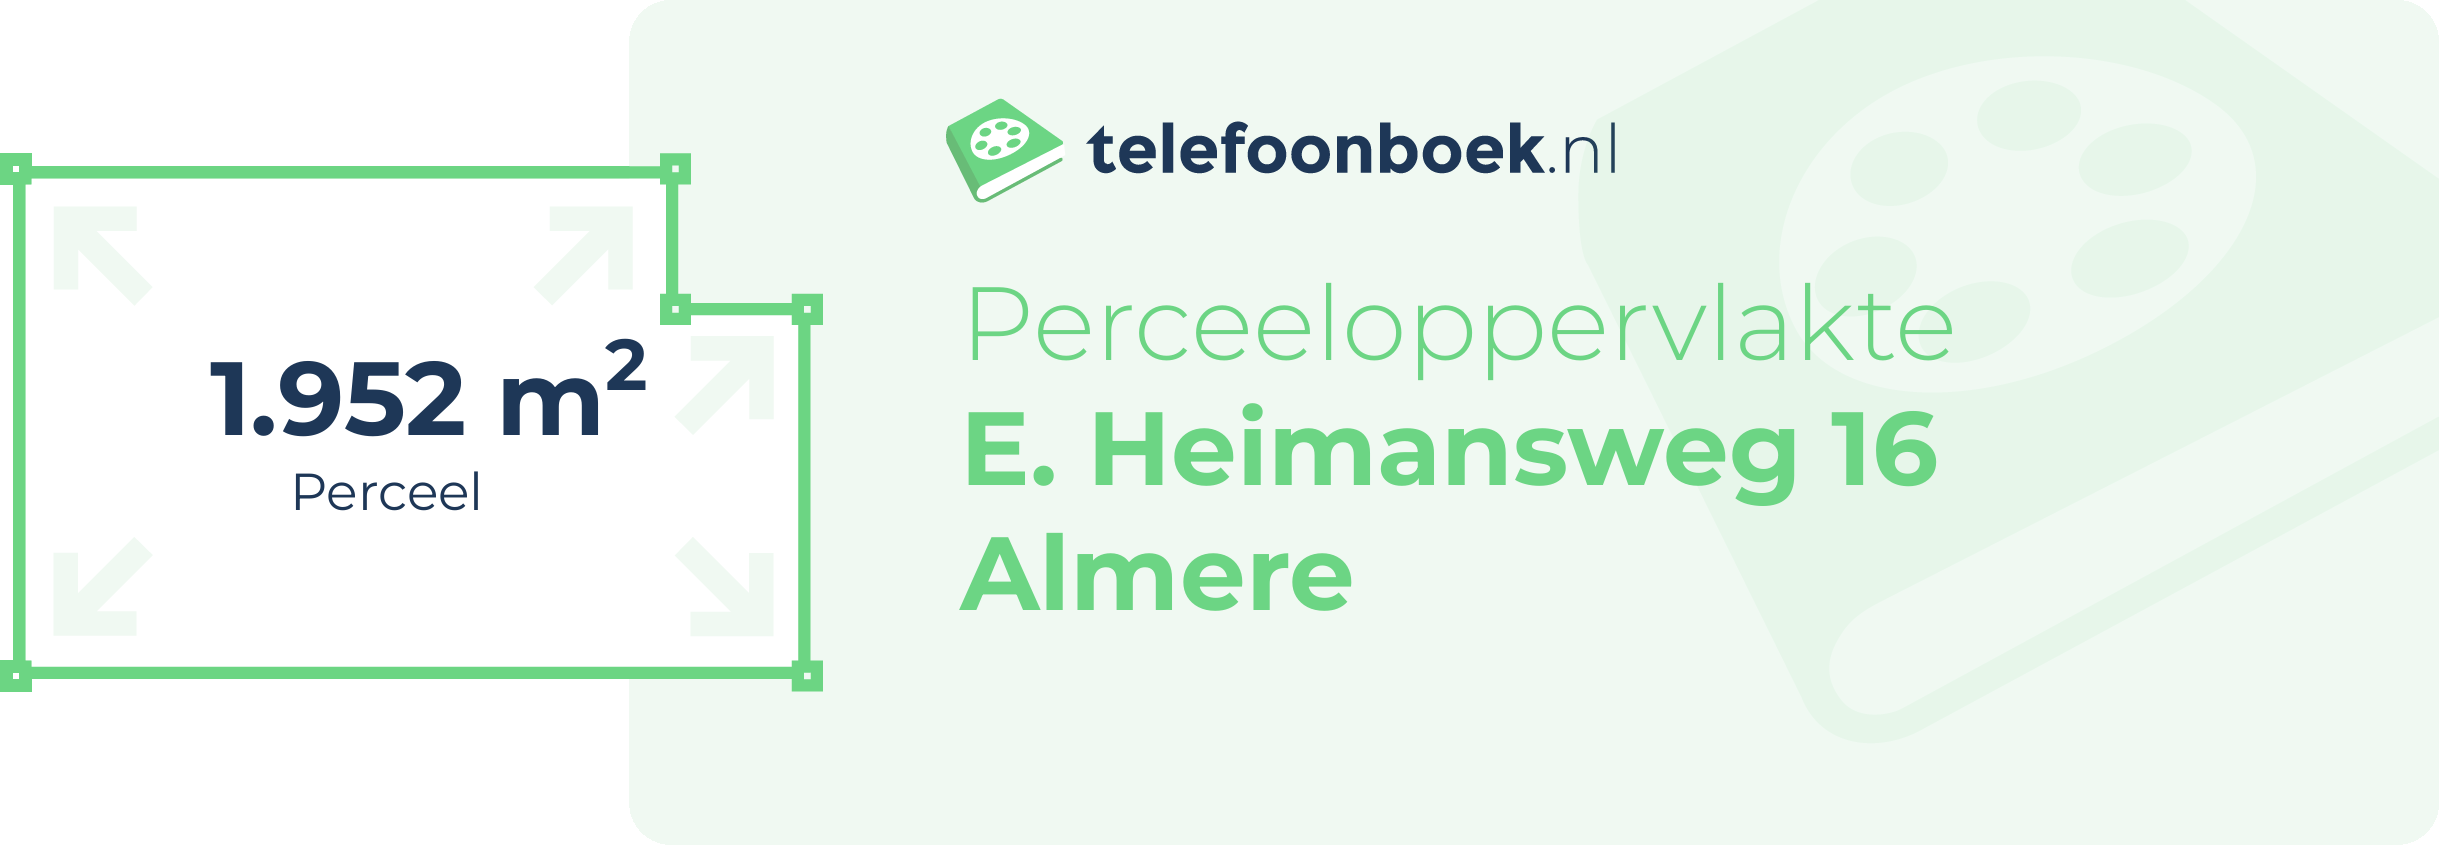 Perceeloppervlakte E. Heimansweg 16 Almere